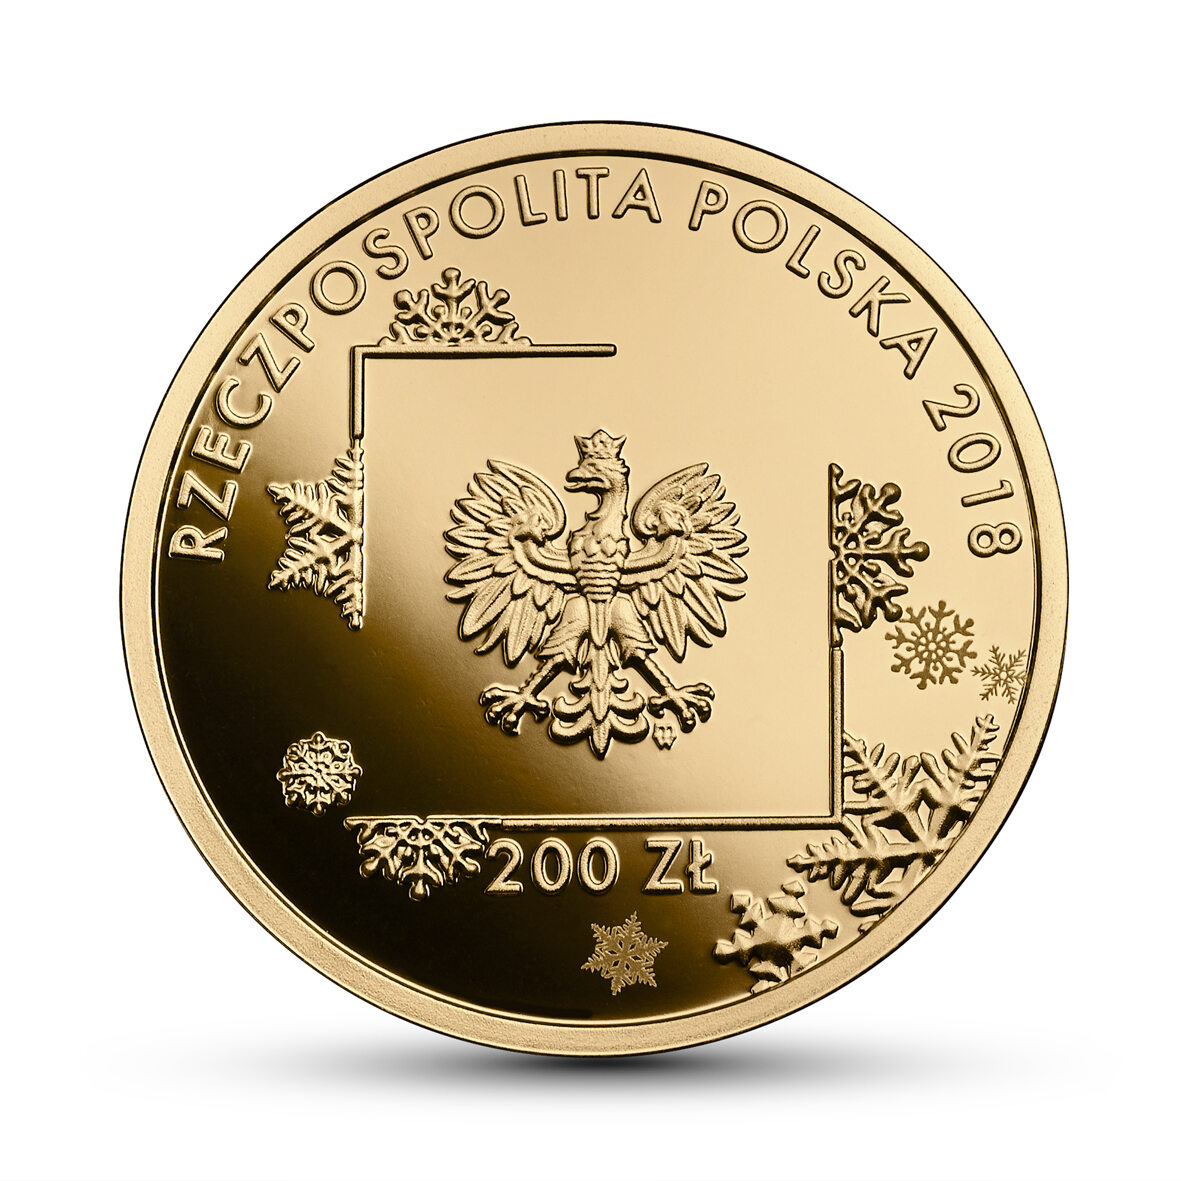 Moneta z serii "Polska kadra olimpijska" 